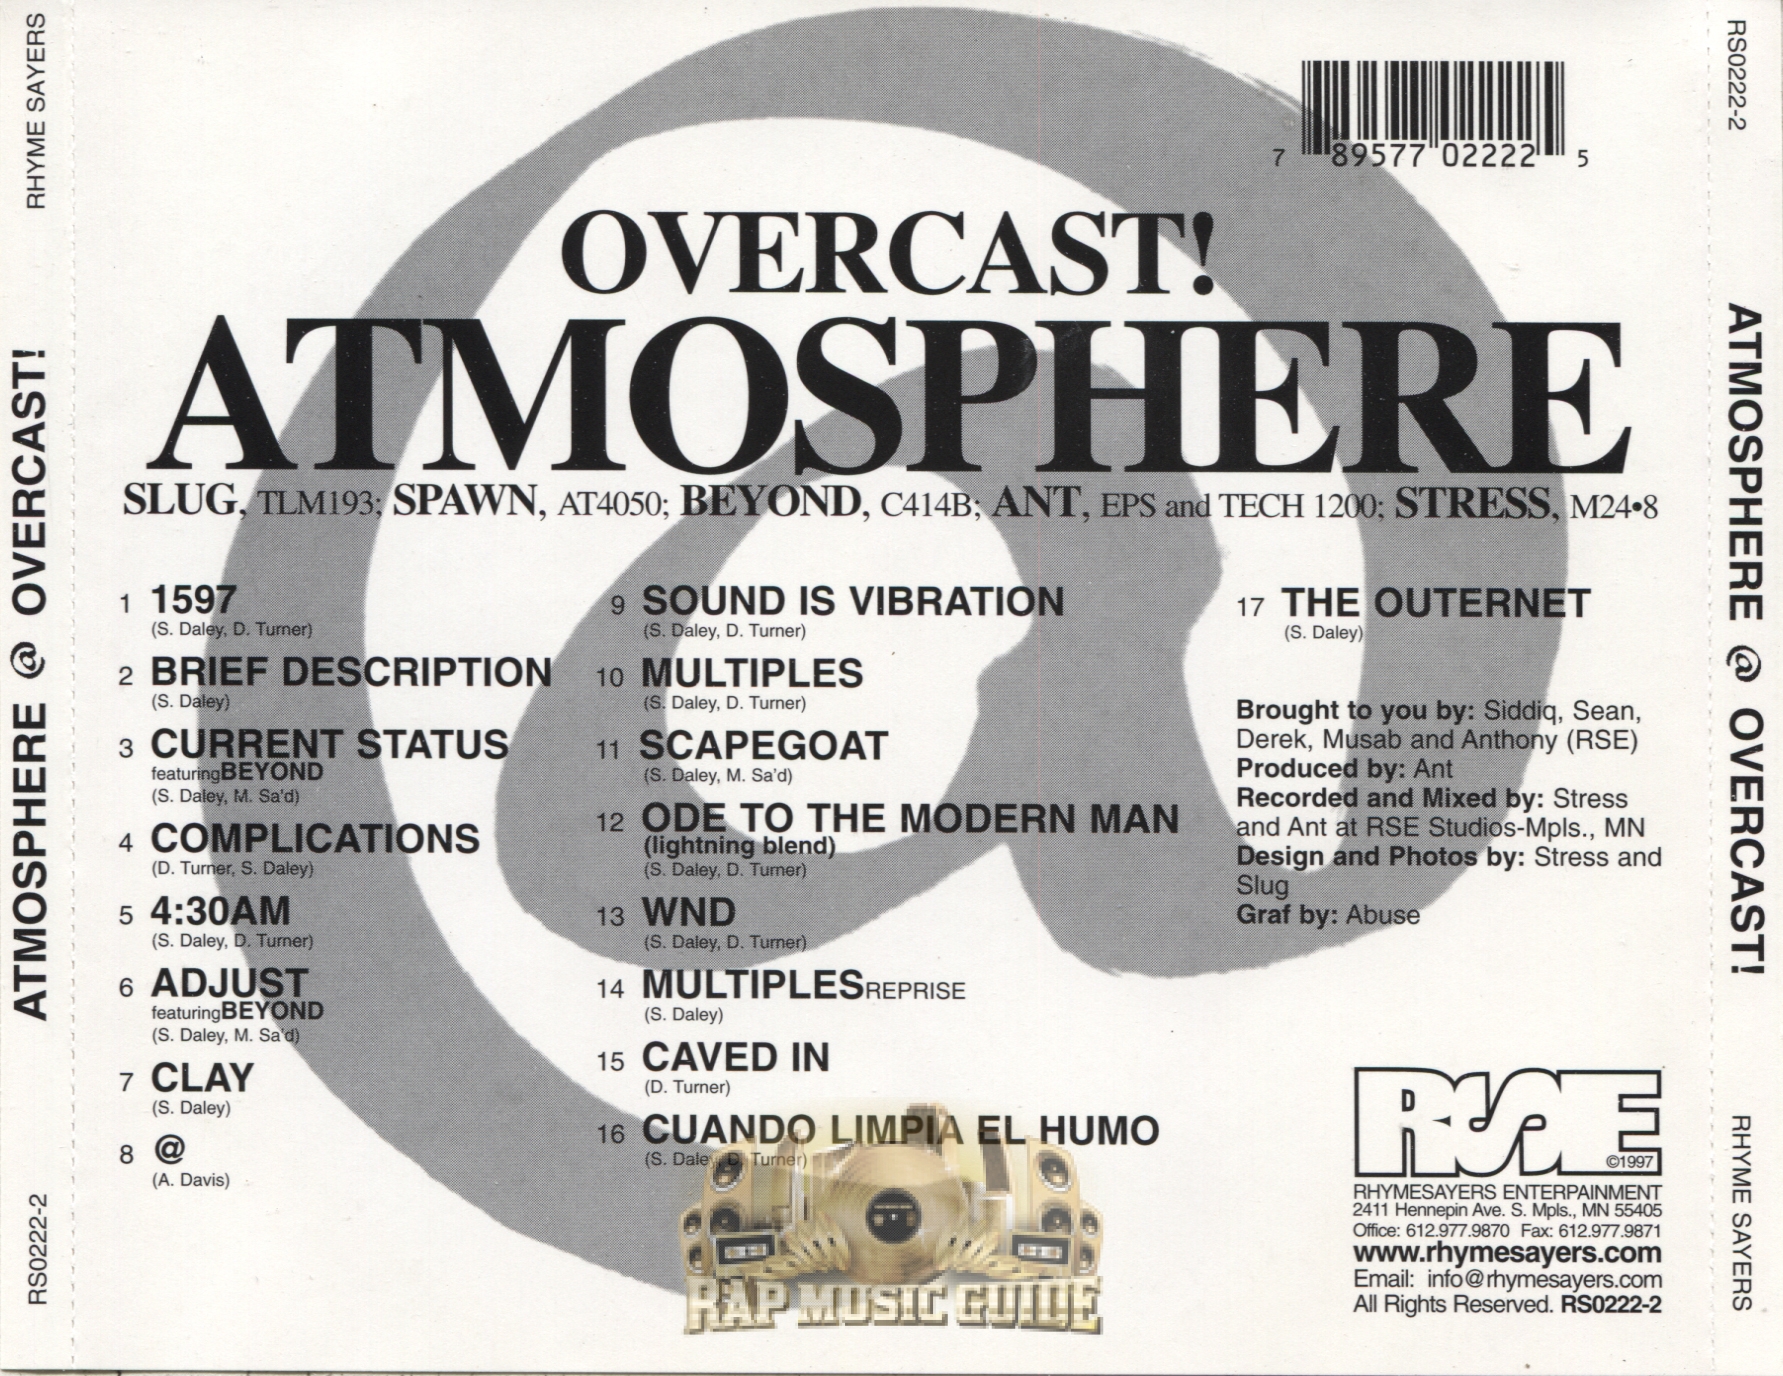 Atmosphere - Overcast!: CD | Rap Music Guide